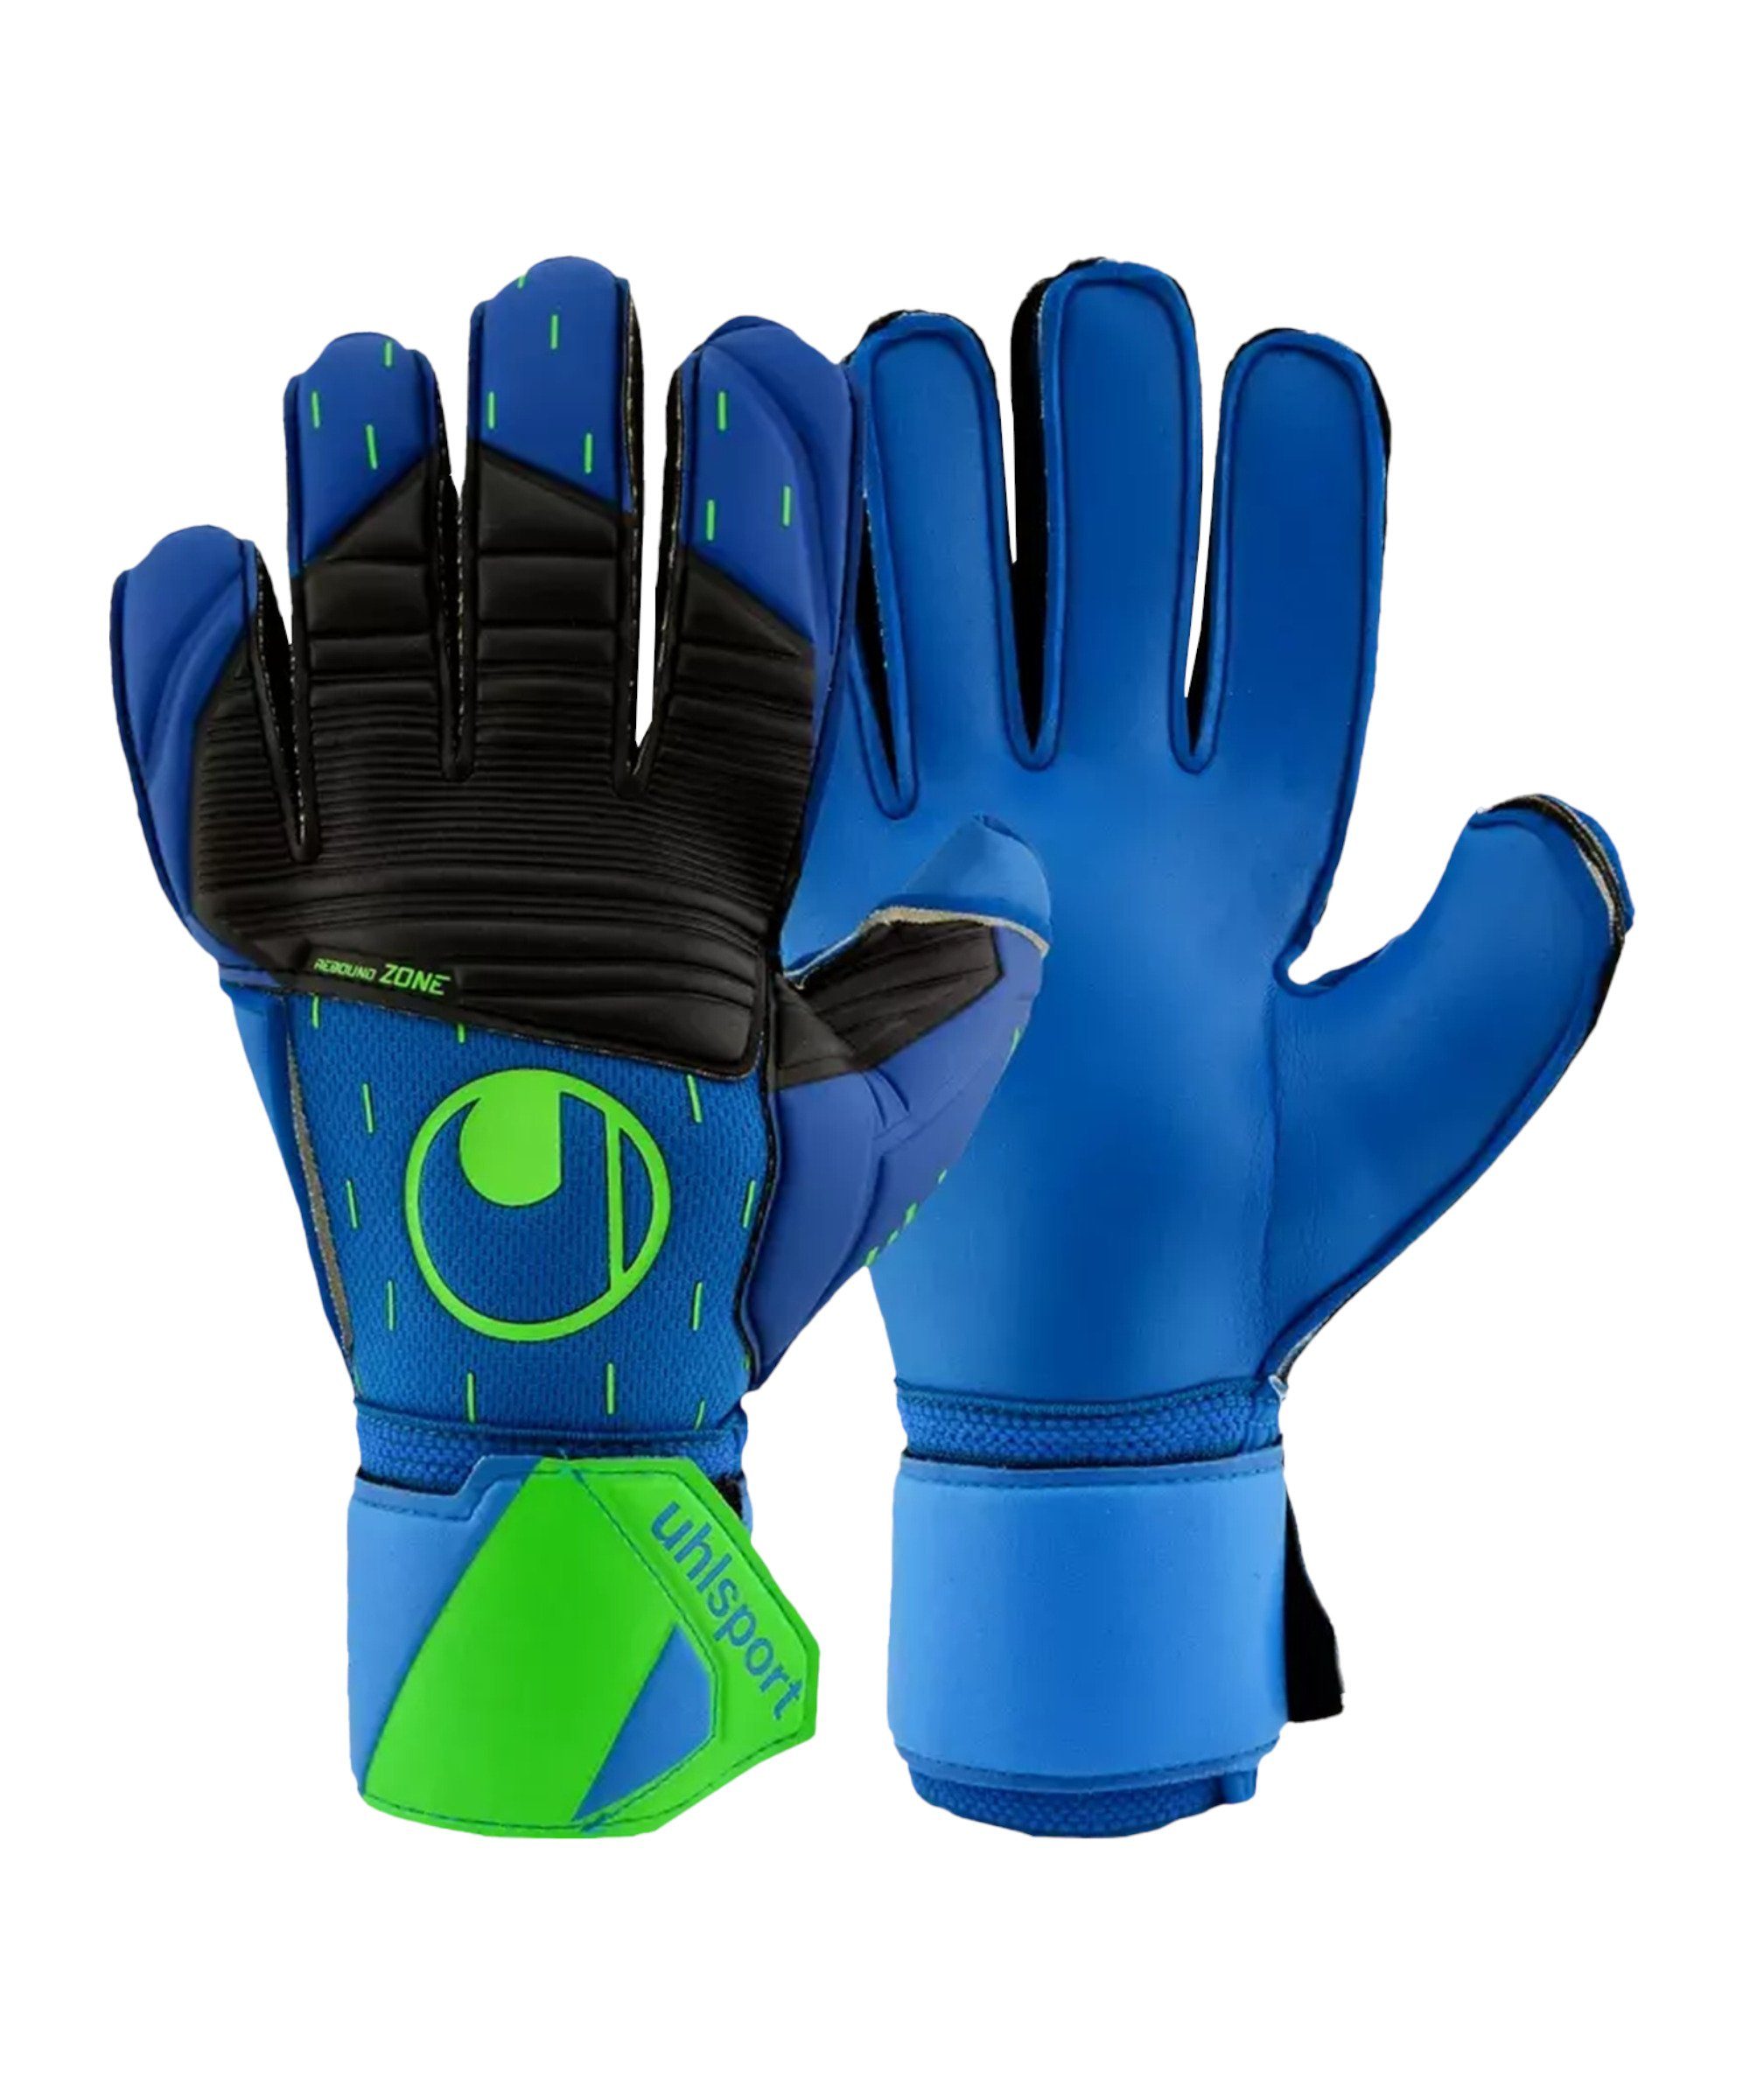 TW-Handschuhe Aquasoft Torwarthandschuhe uhlsport